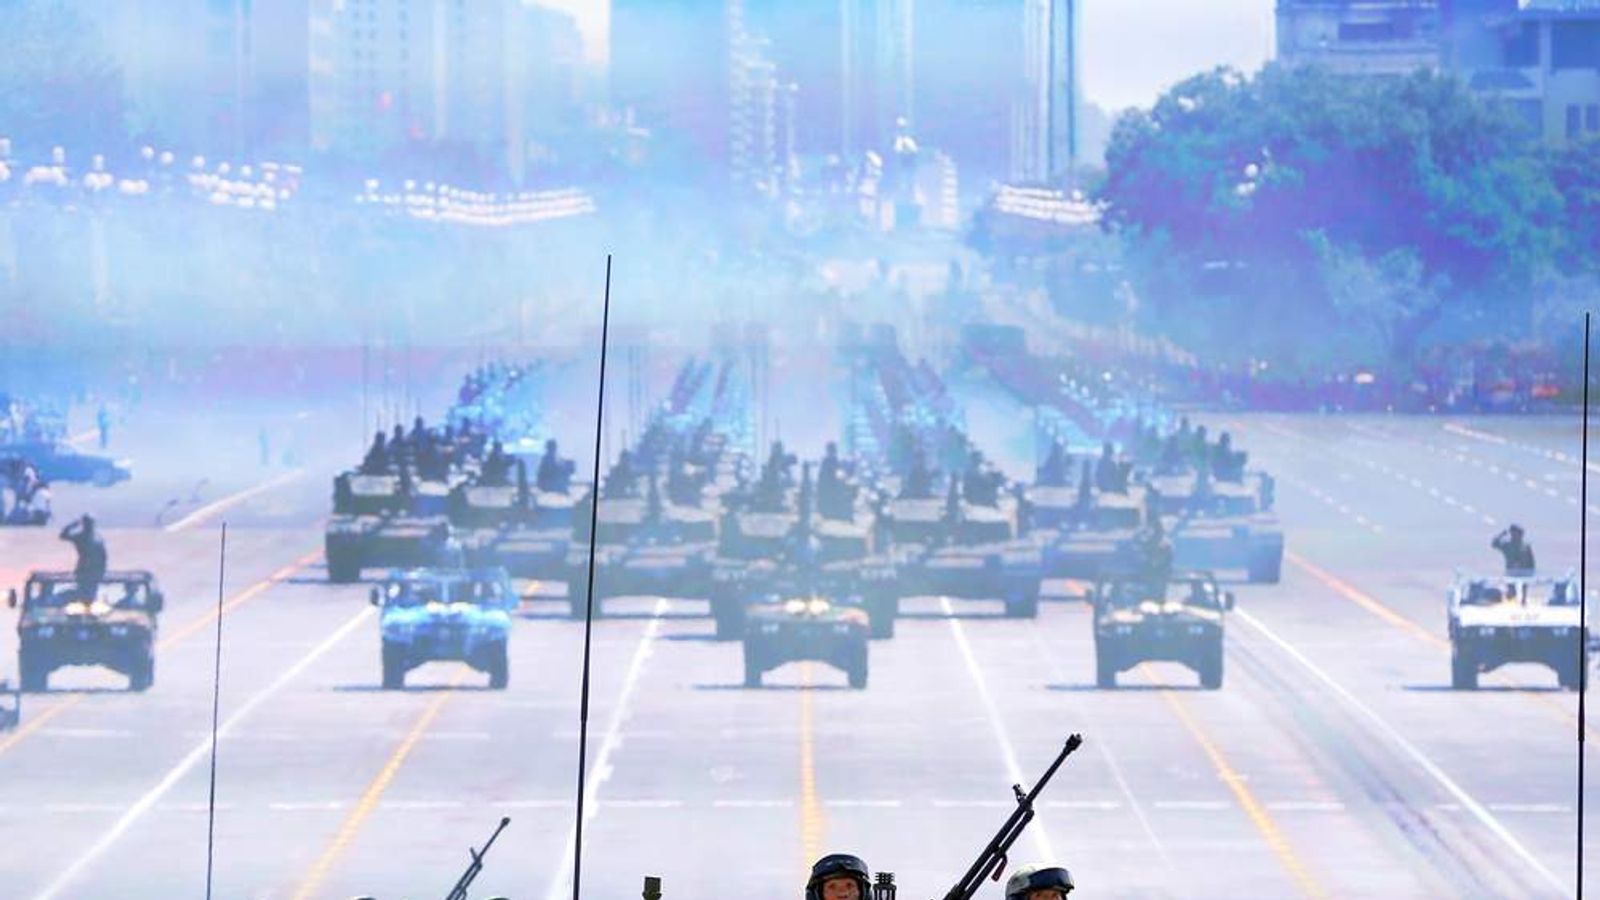 china victory day parade 2015 rewatch